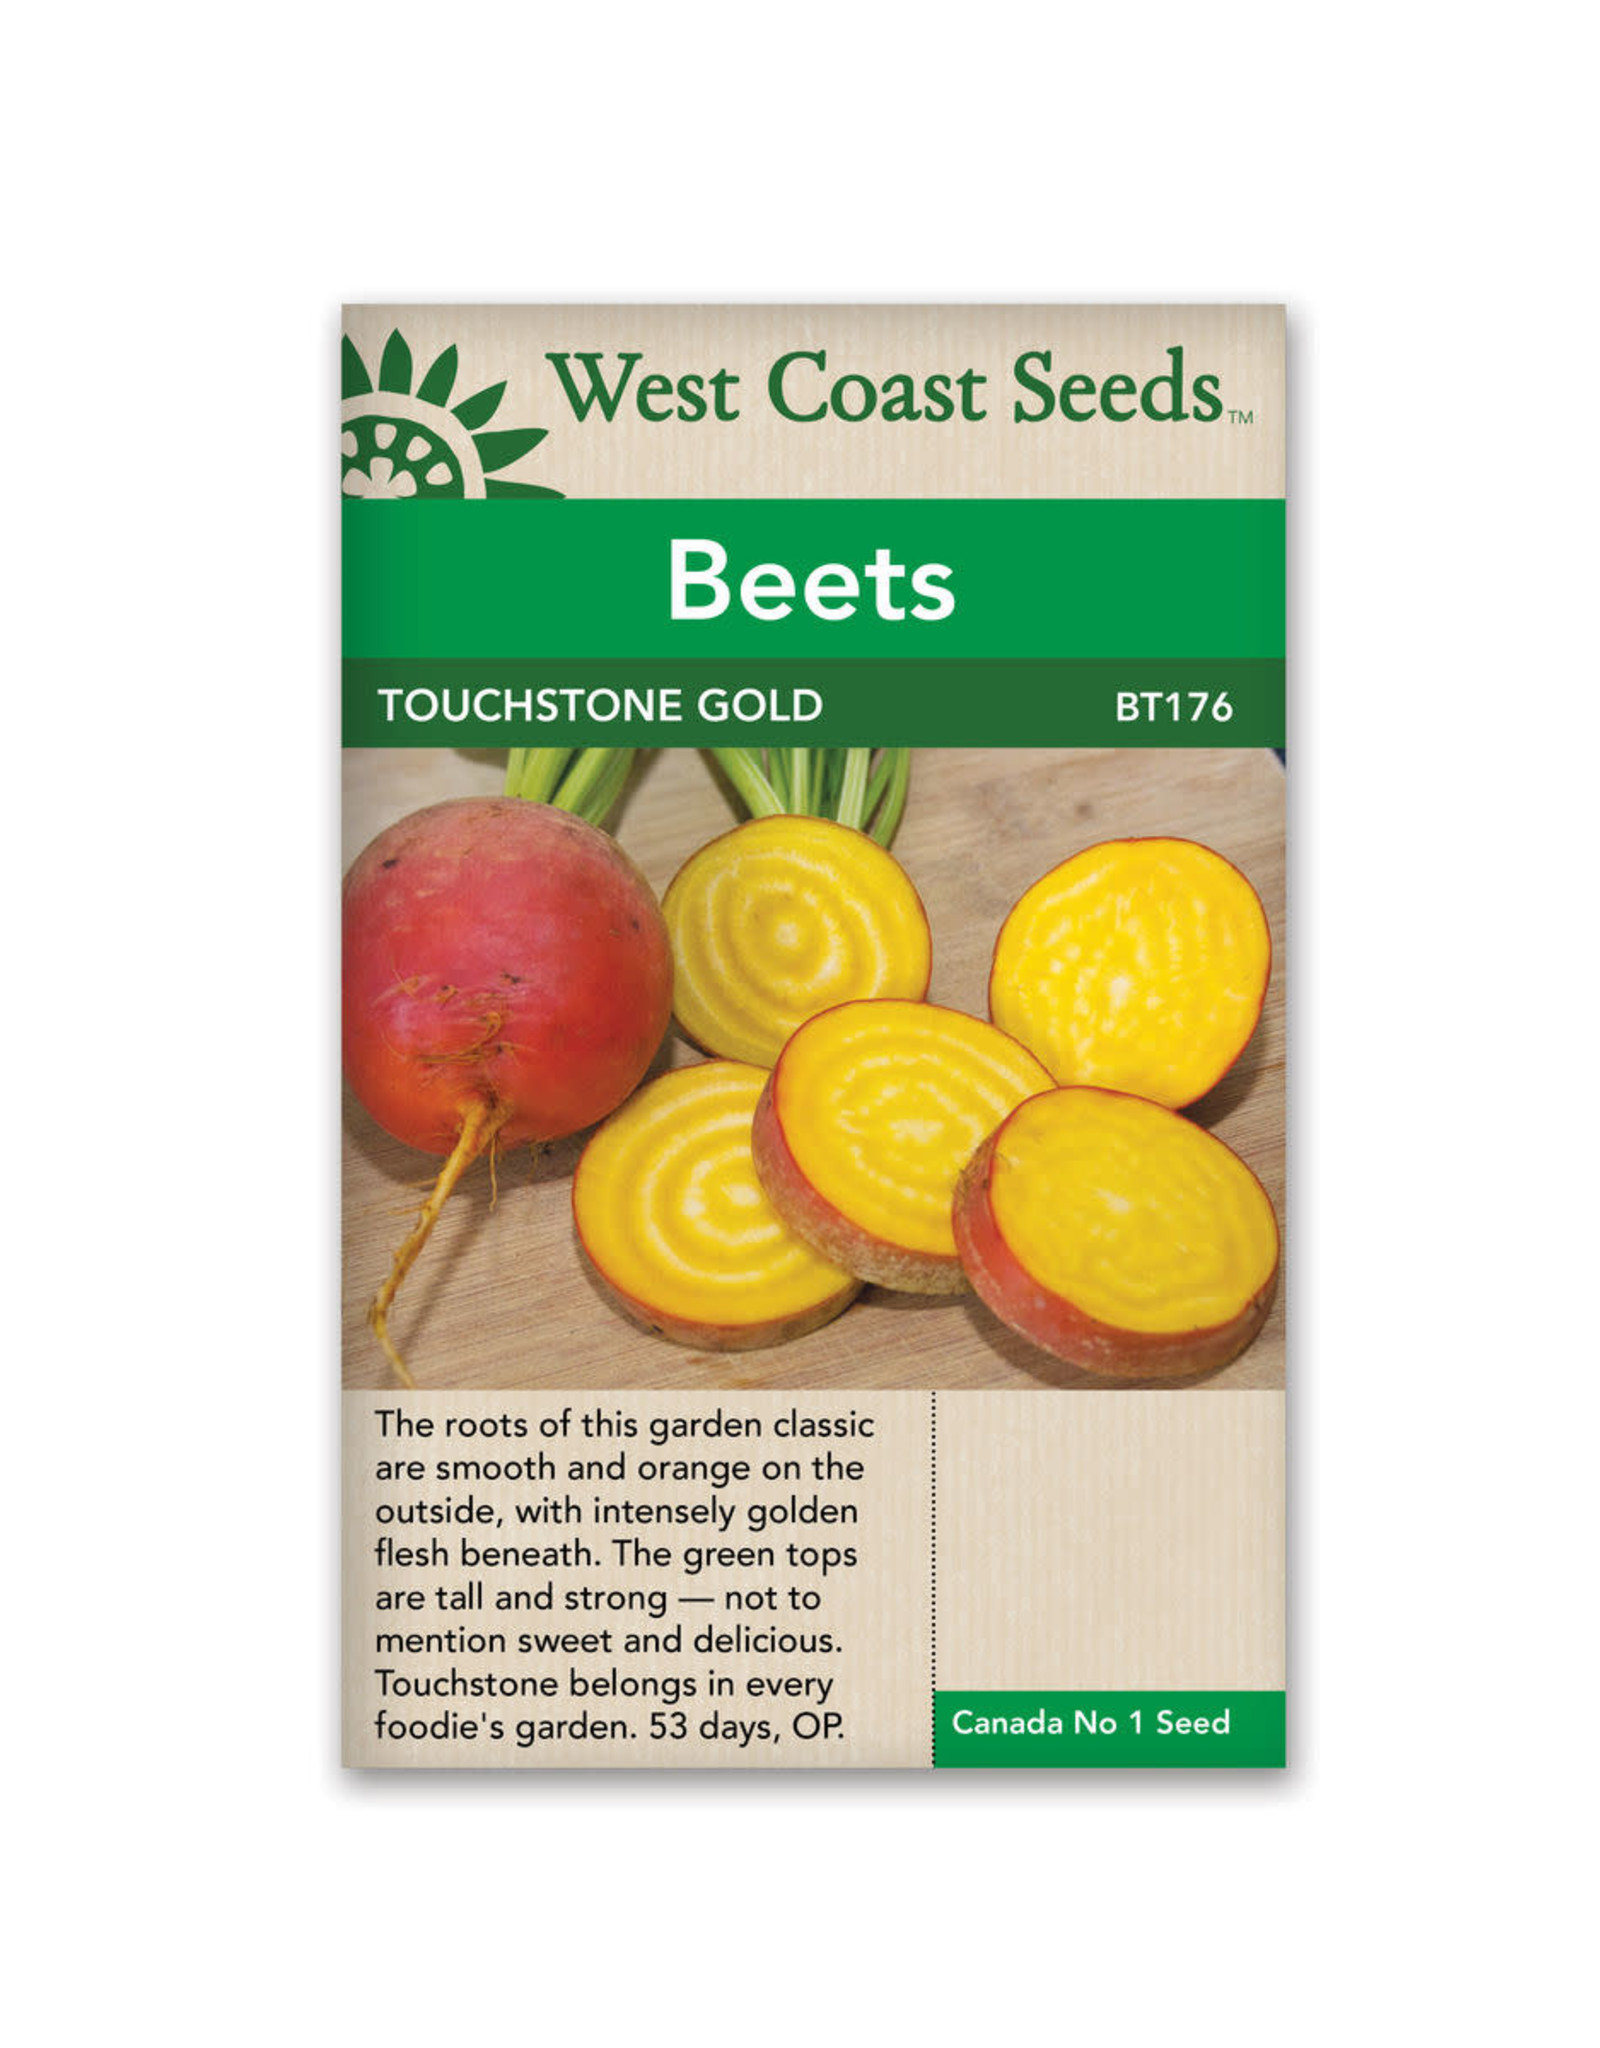 West Coast Seeds Touchstone Gold